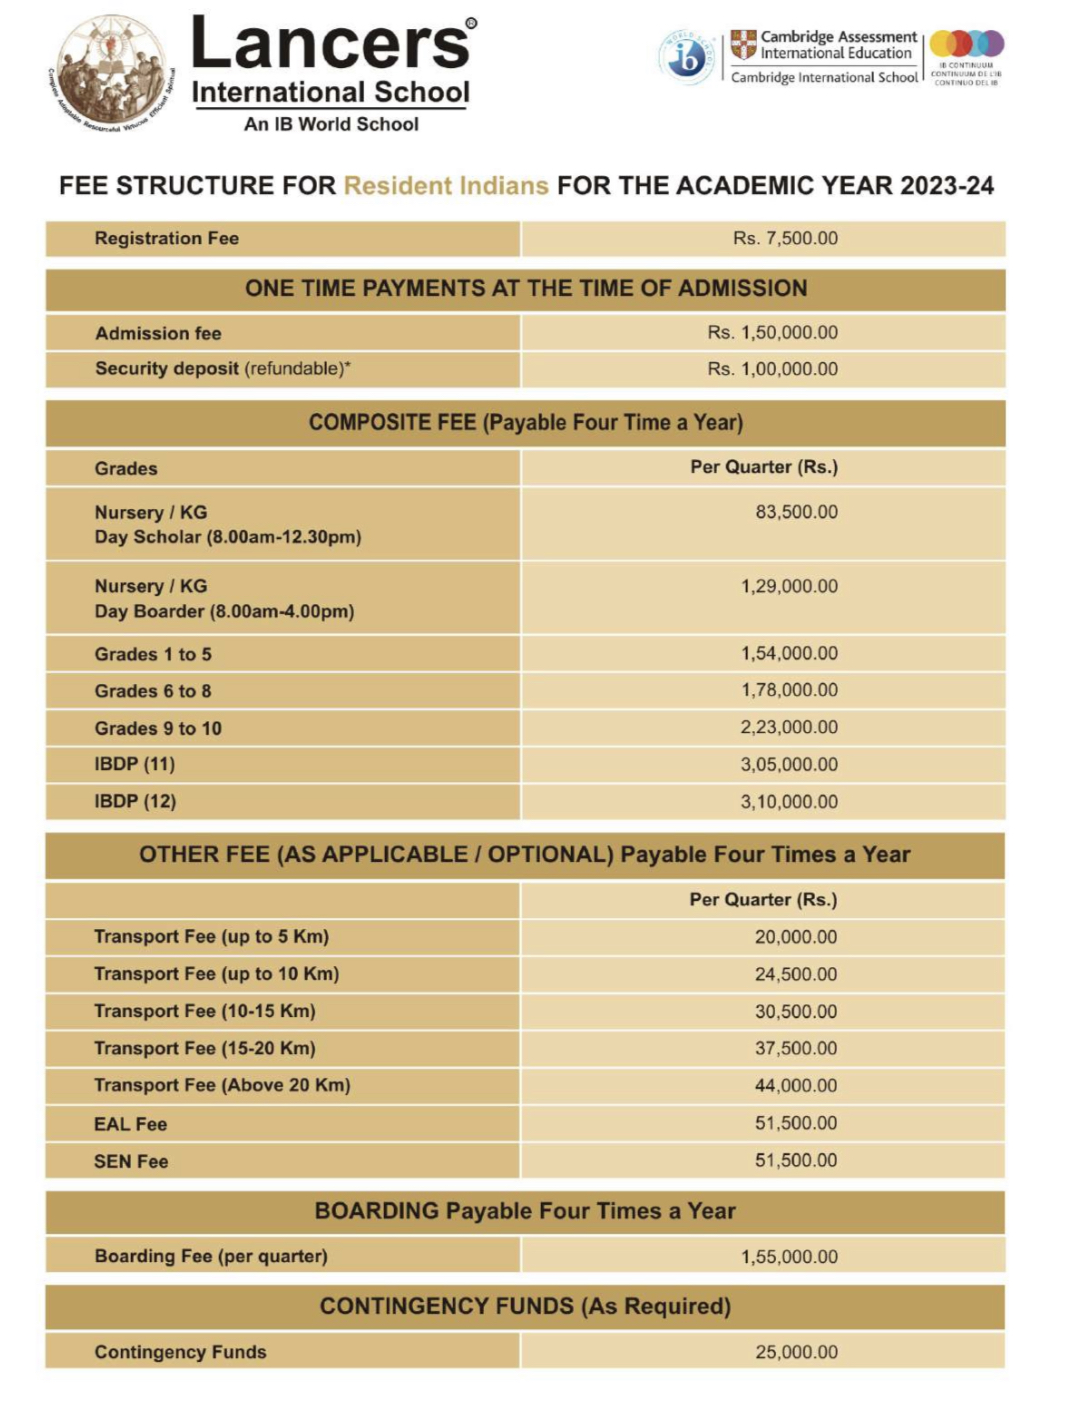 Lancers International School fees